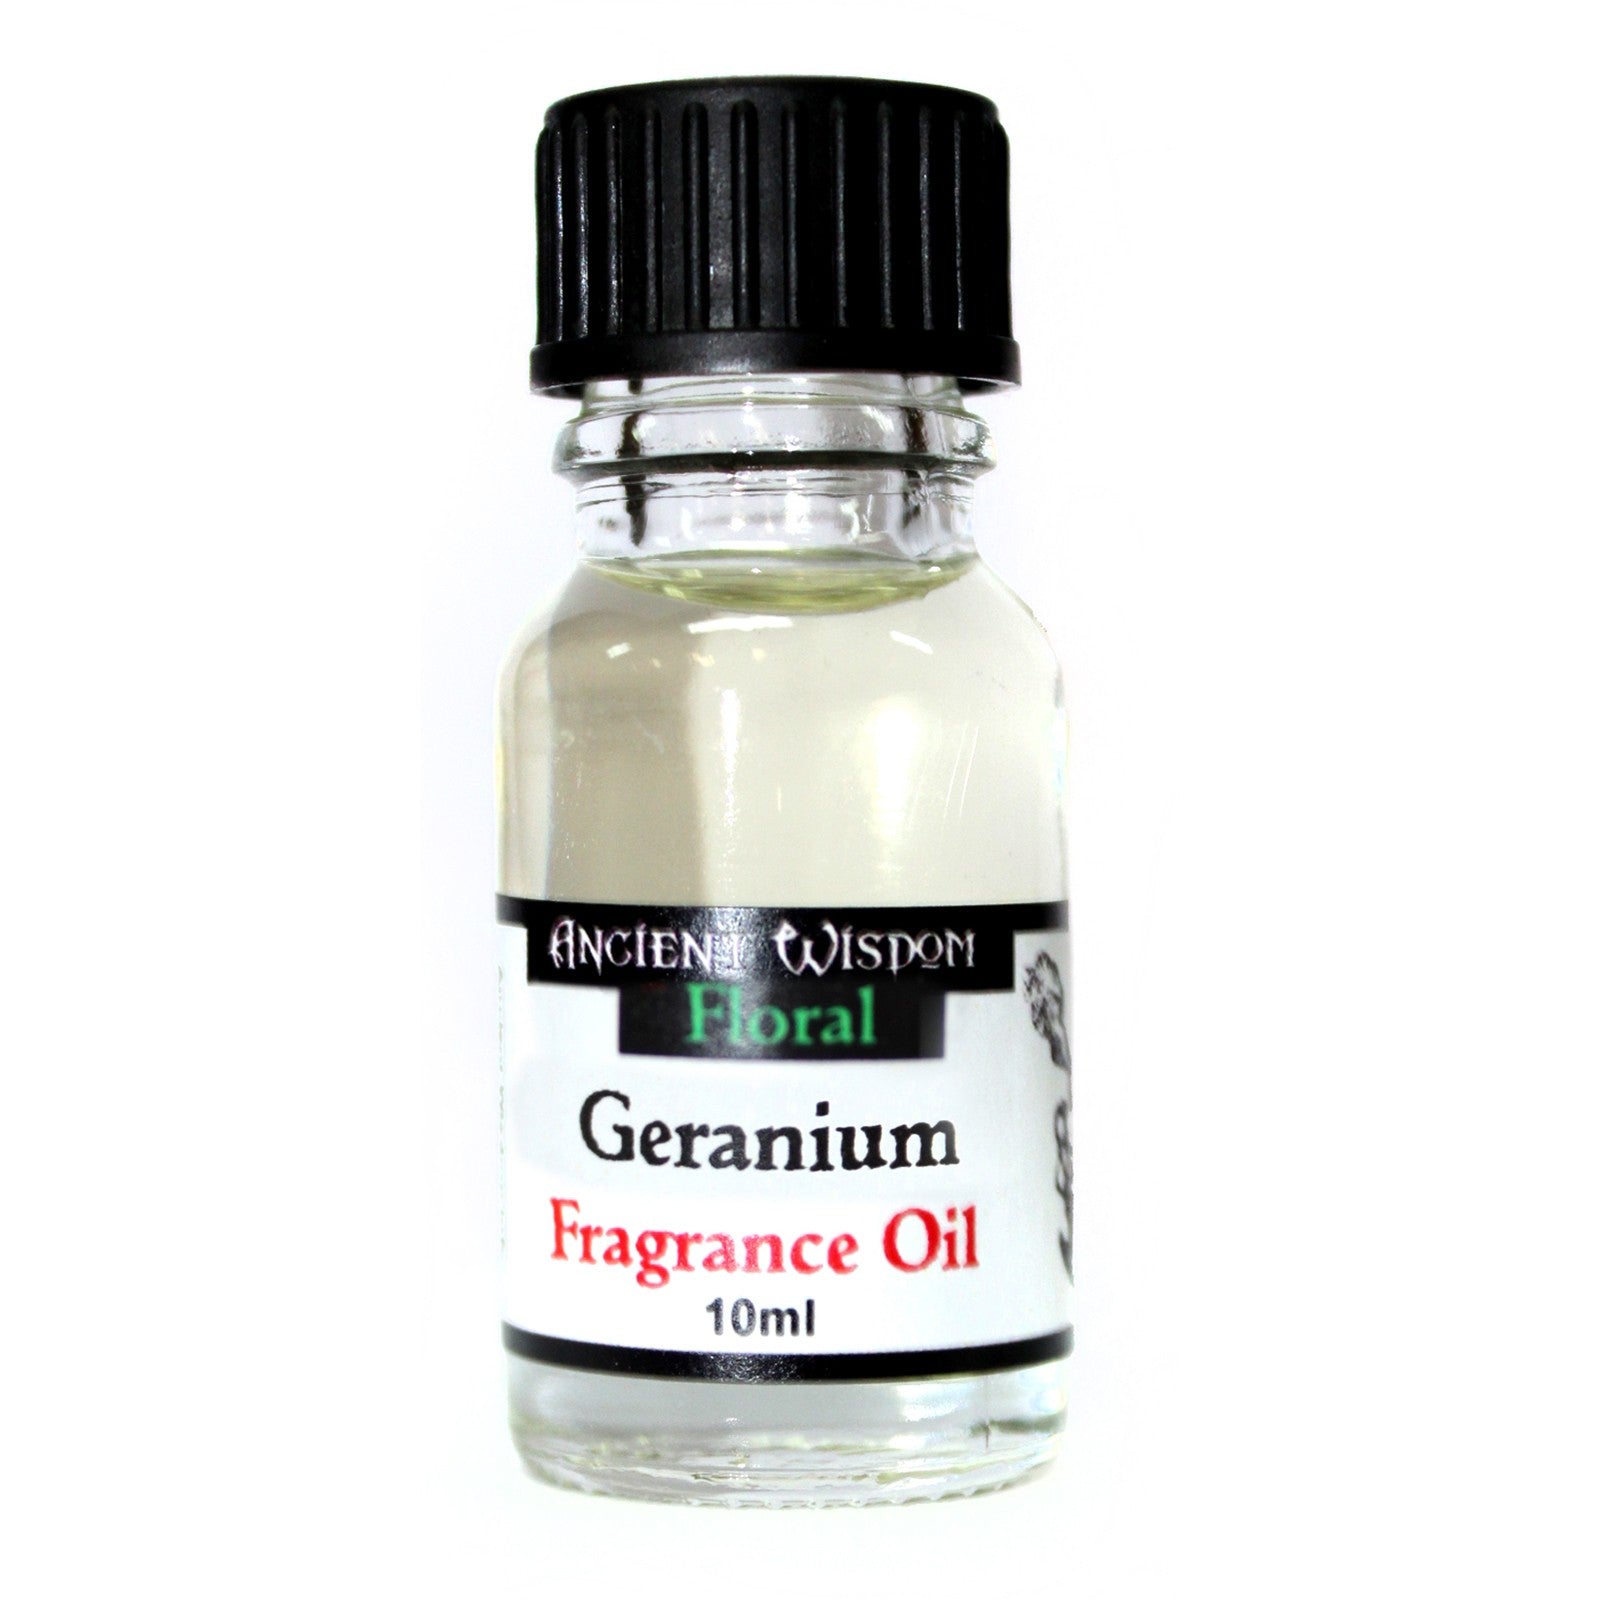 View 10ml Geranium Fragrance Oil information